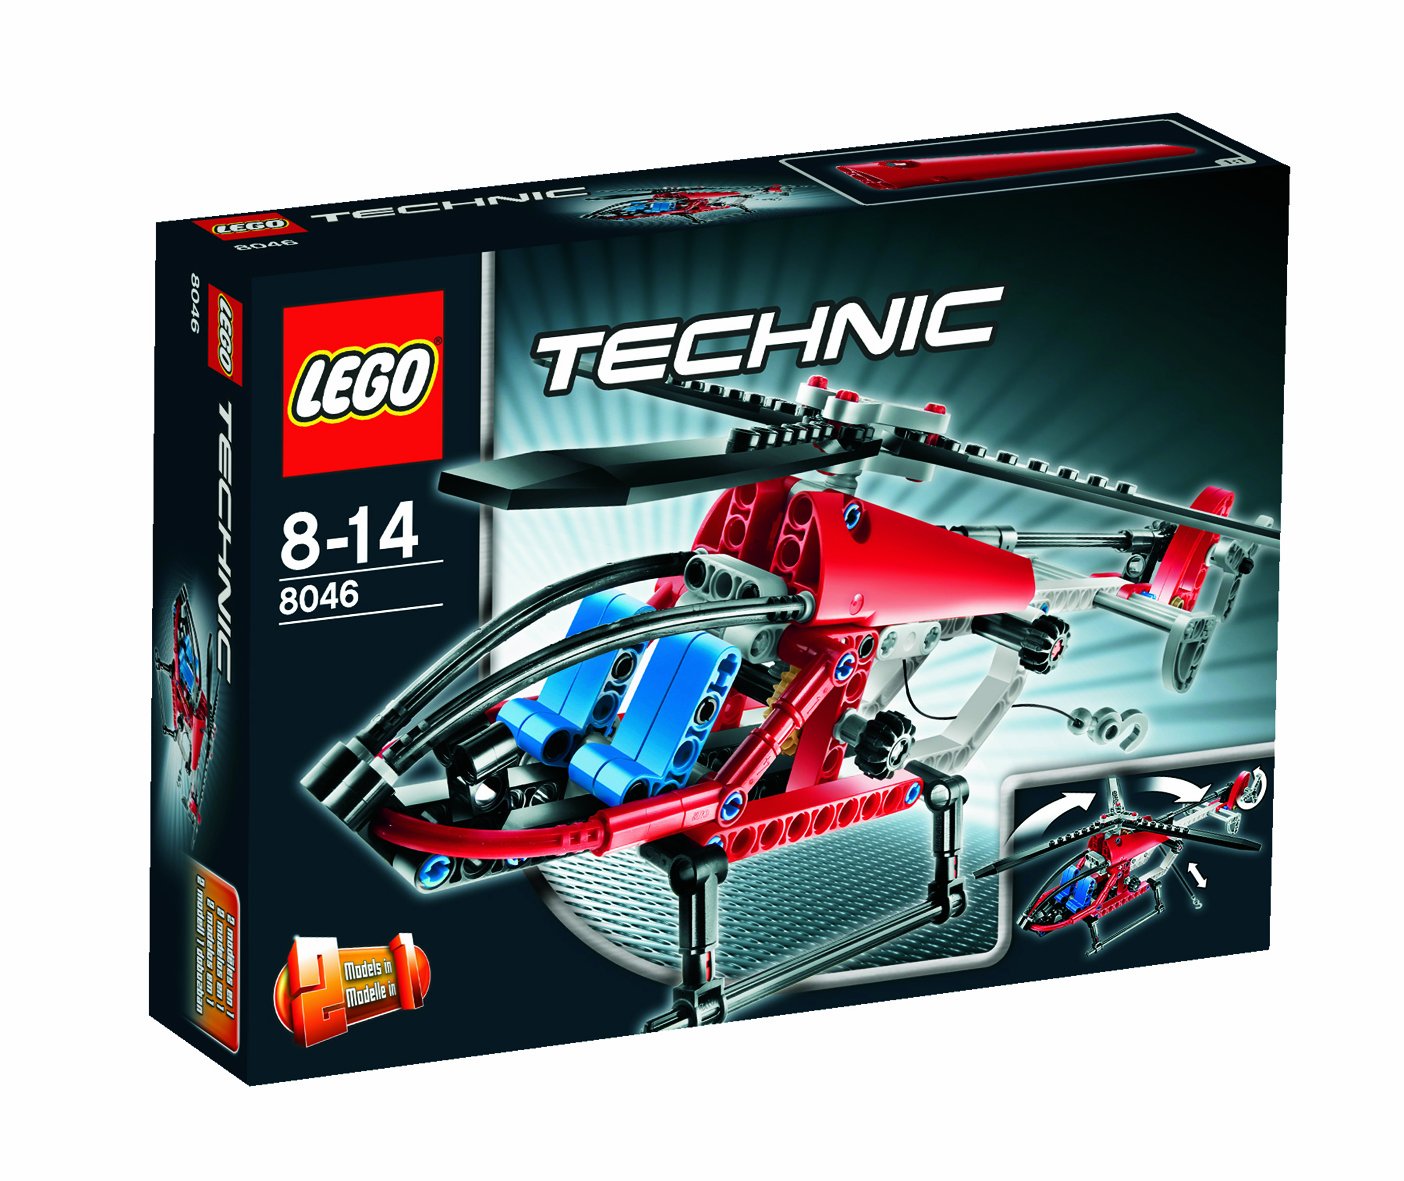 Lego Technic Helicopter